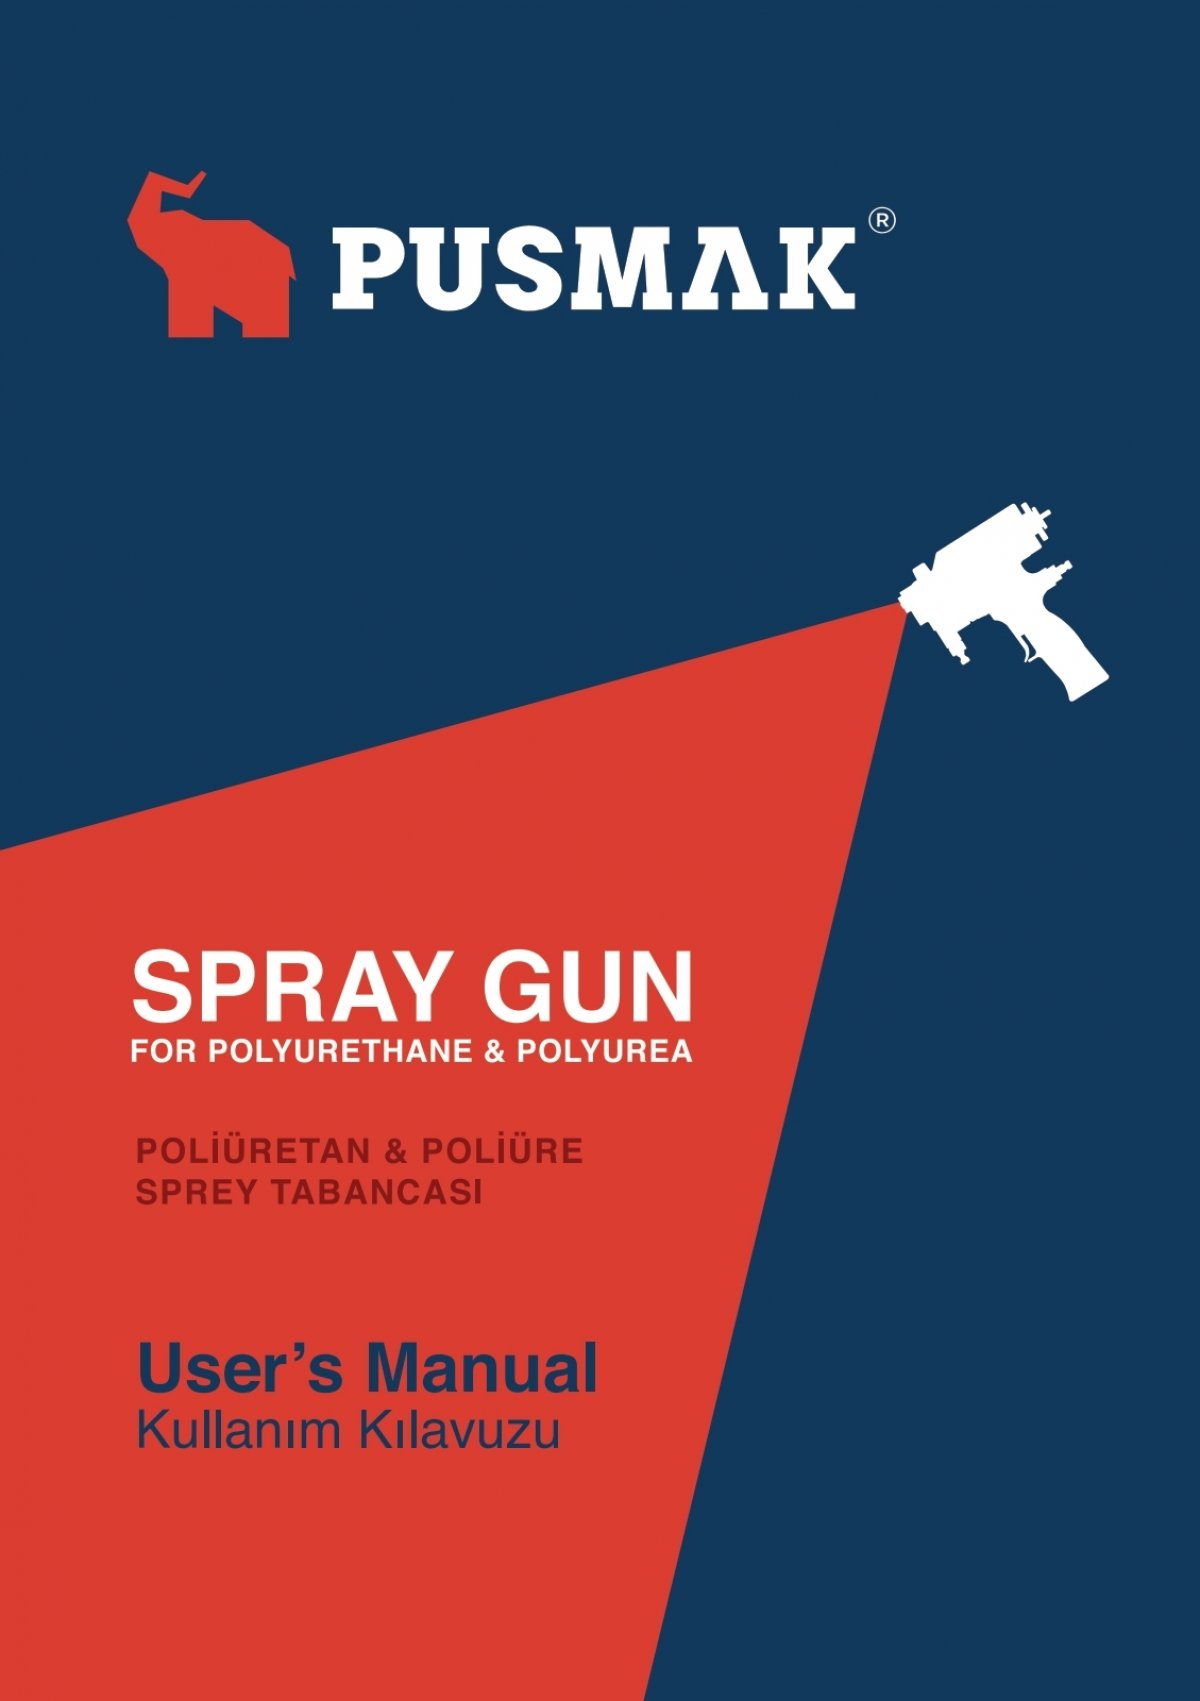 Spray Foam Insulation Guns - Pusmak Machine